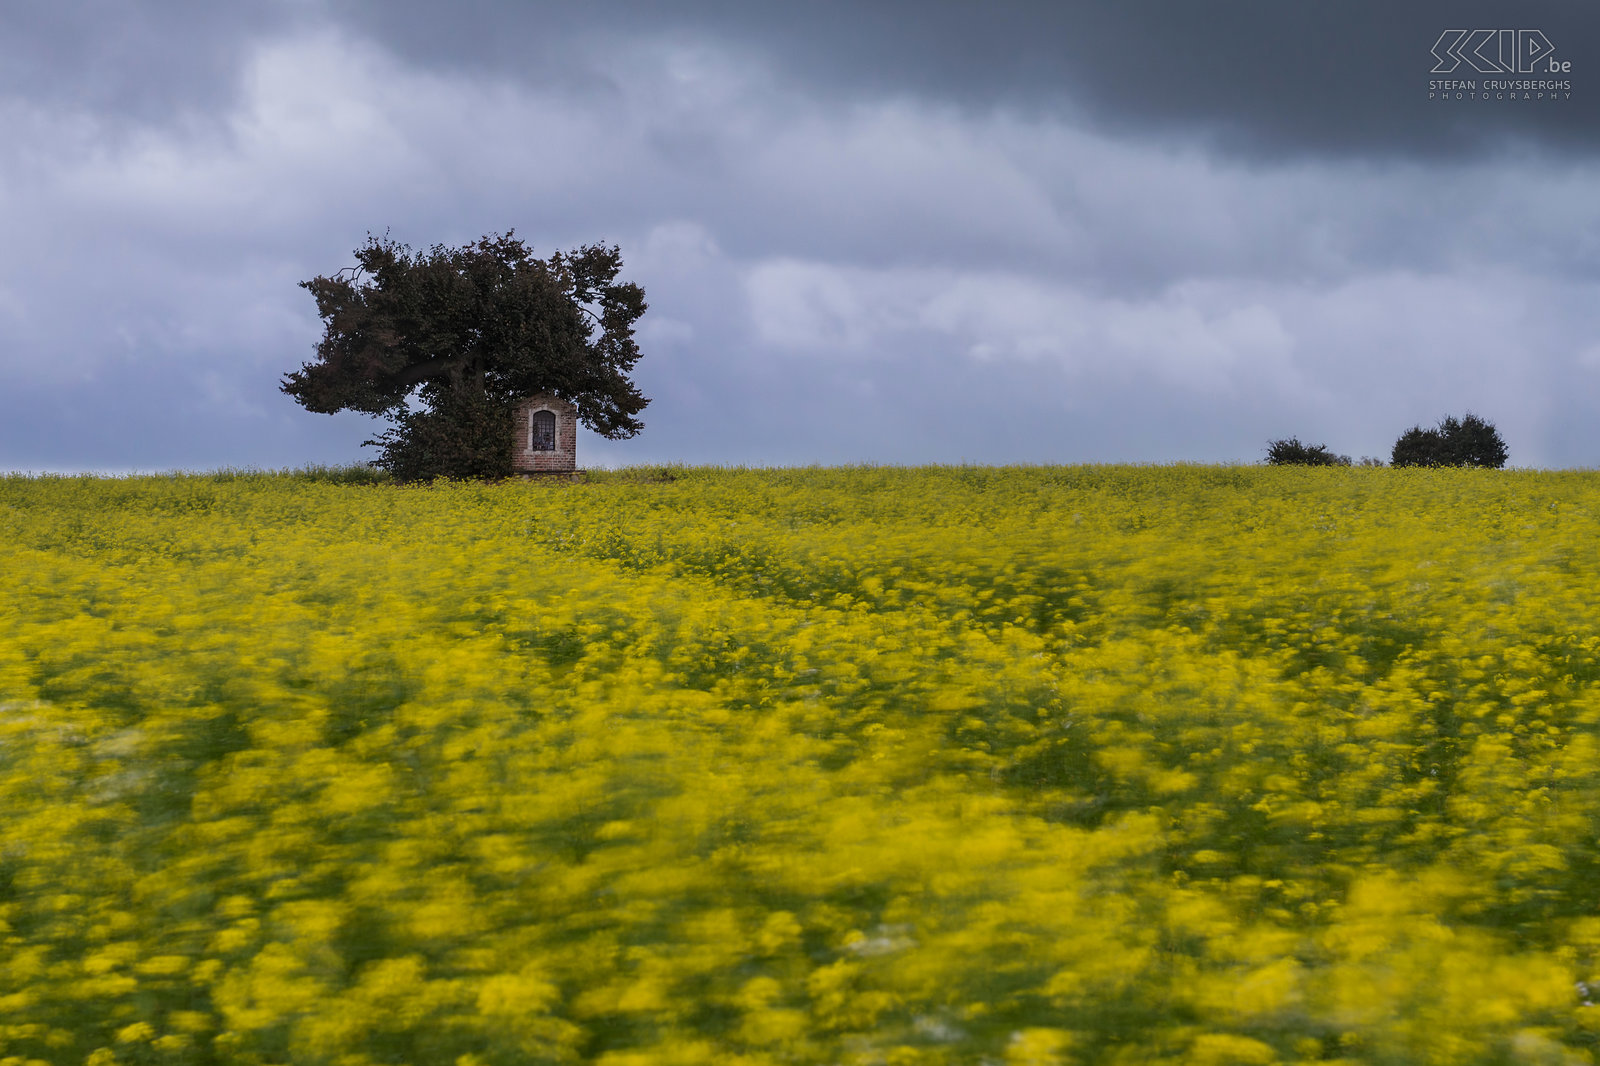 Sint-Pieters-Rode - Kapel met koolzaad en dreigende wolken Dreigende wolken en het bloeiende veld koolzaad bij de kleine Sint Jozefskapel in Sint-Pieters-Rode. Stefan Cruysberghs